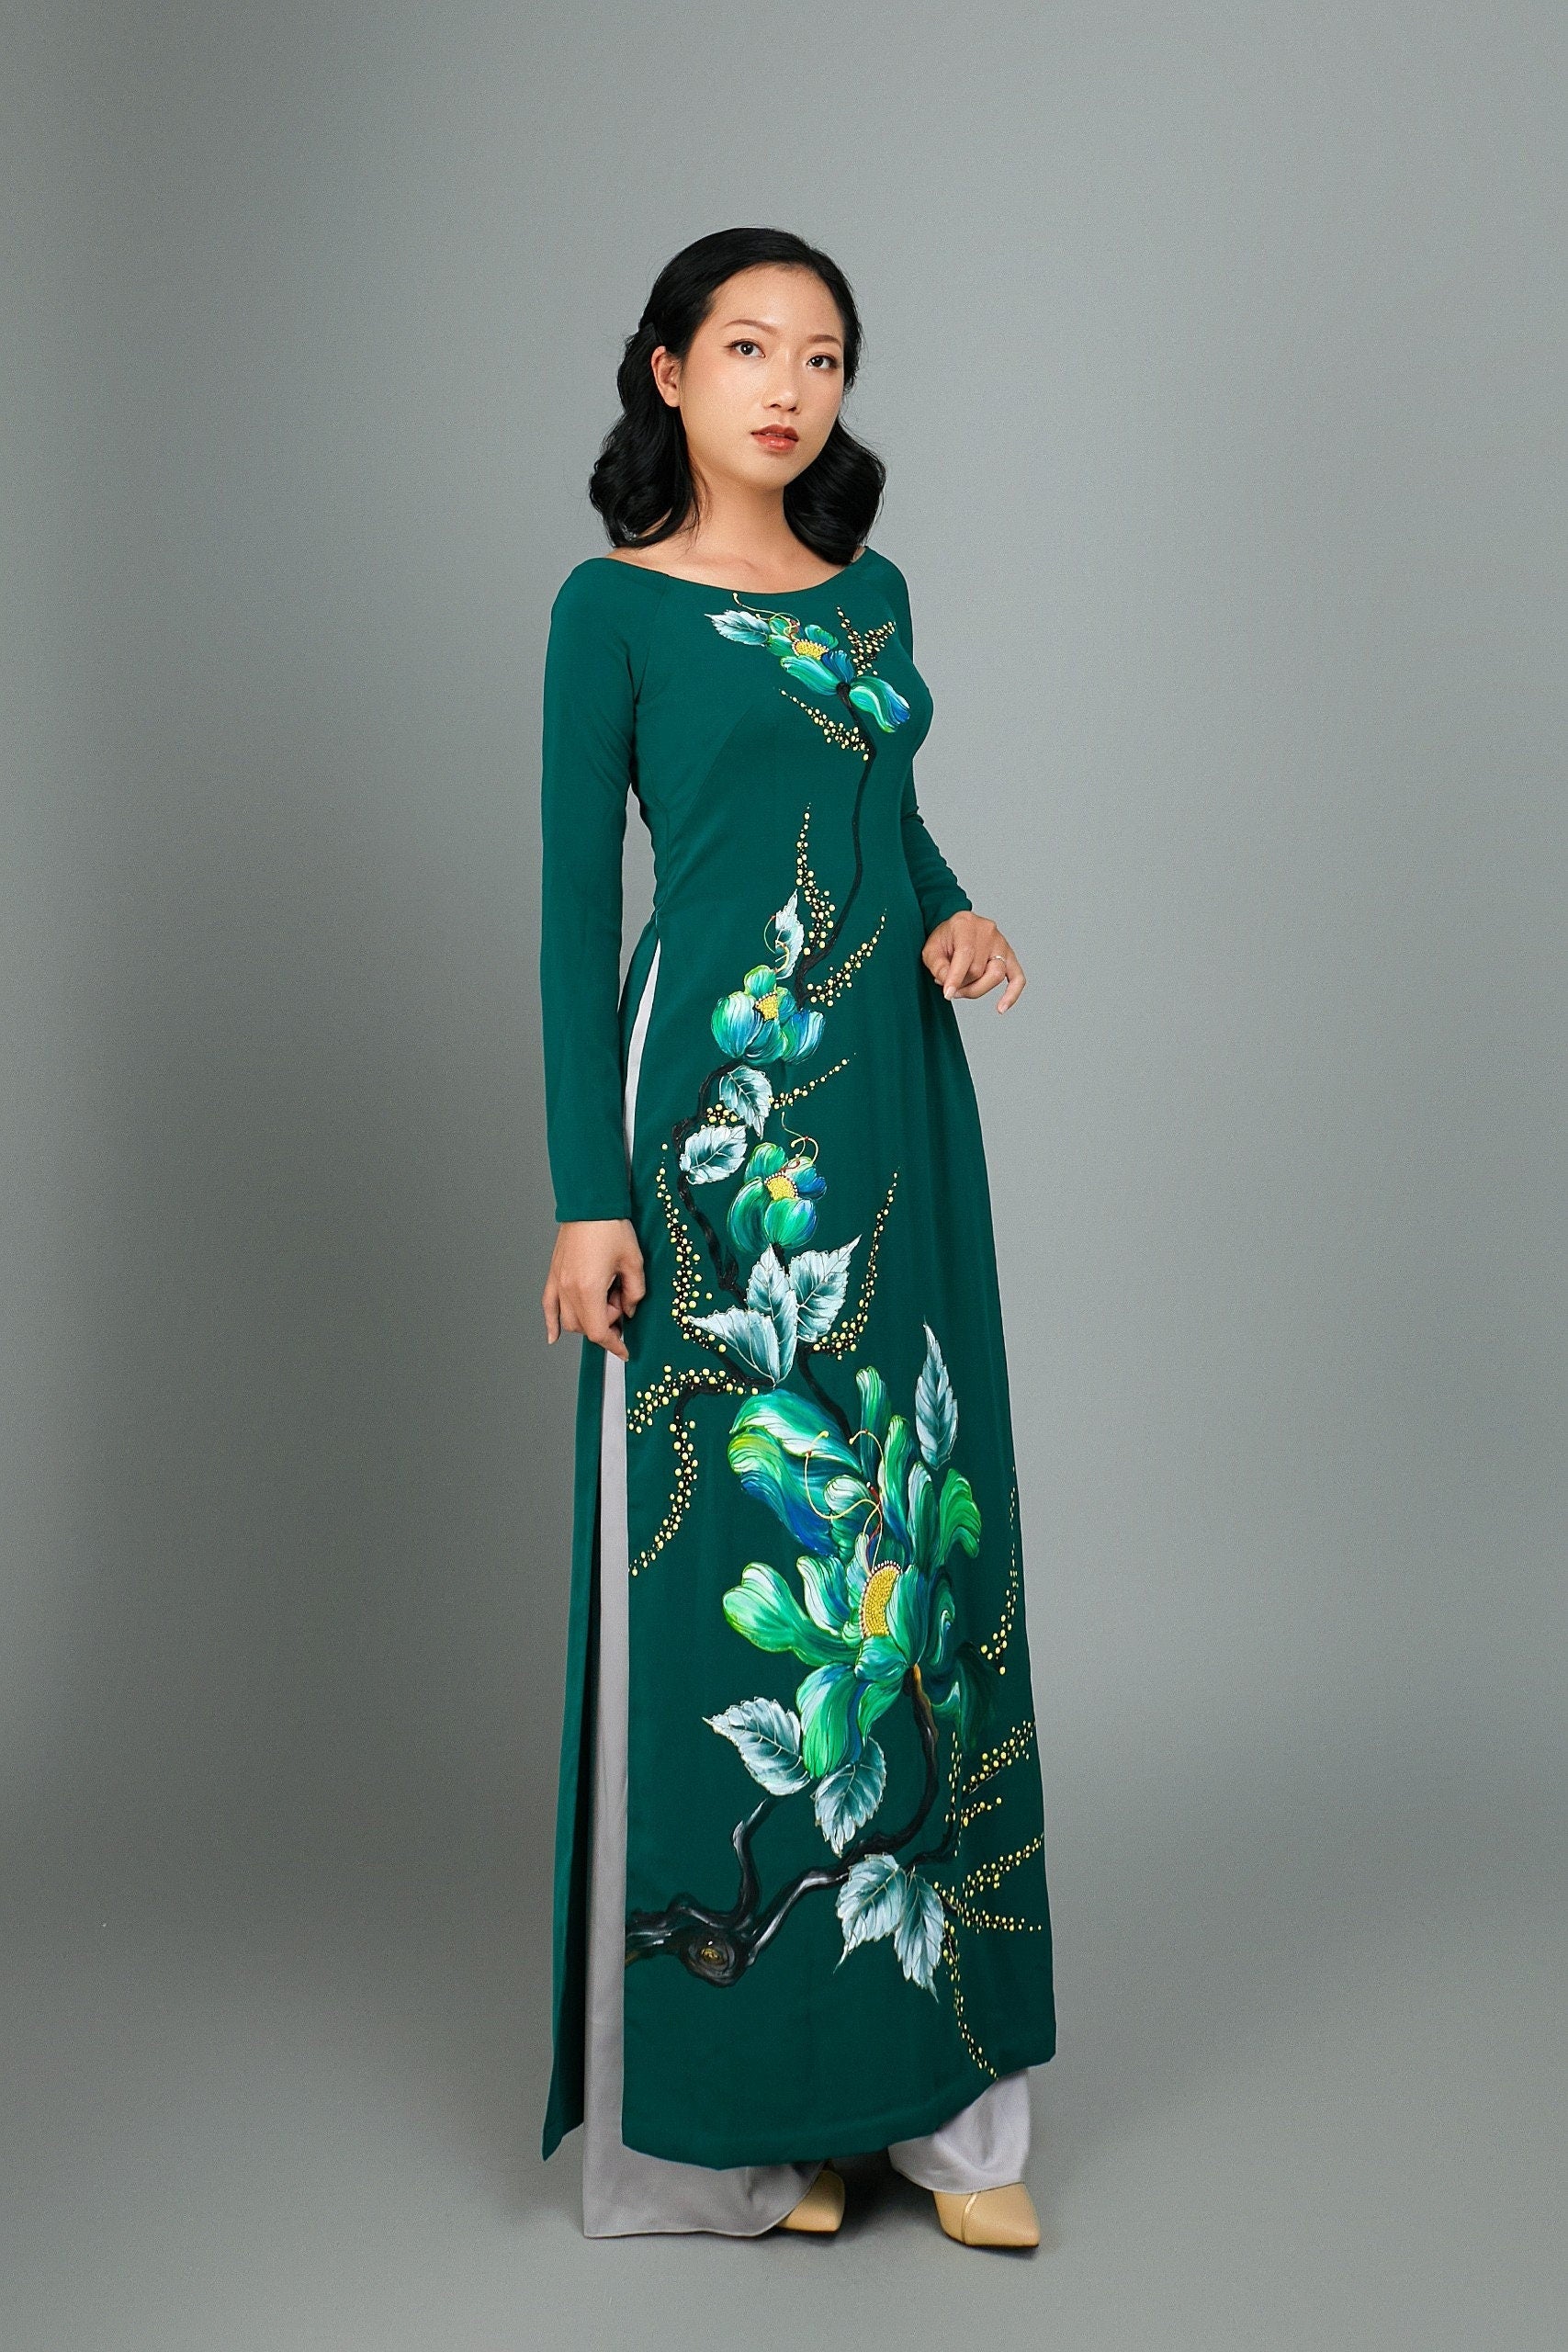 Custom Ao Dai. Hand-painted floral motif on green silk